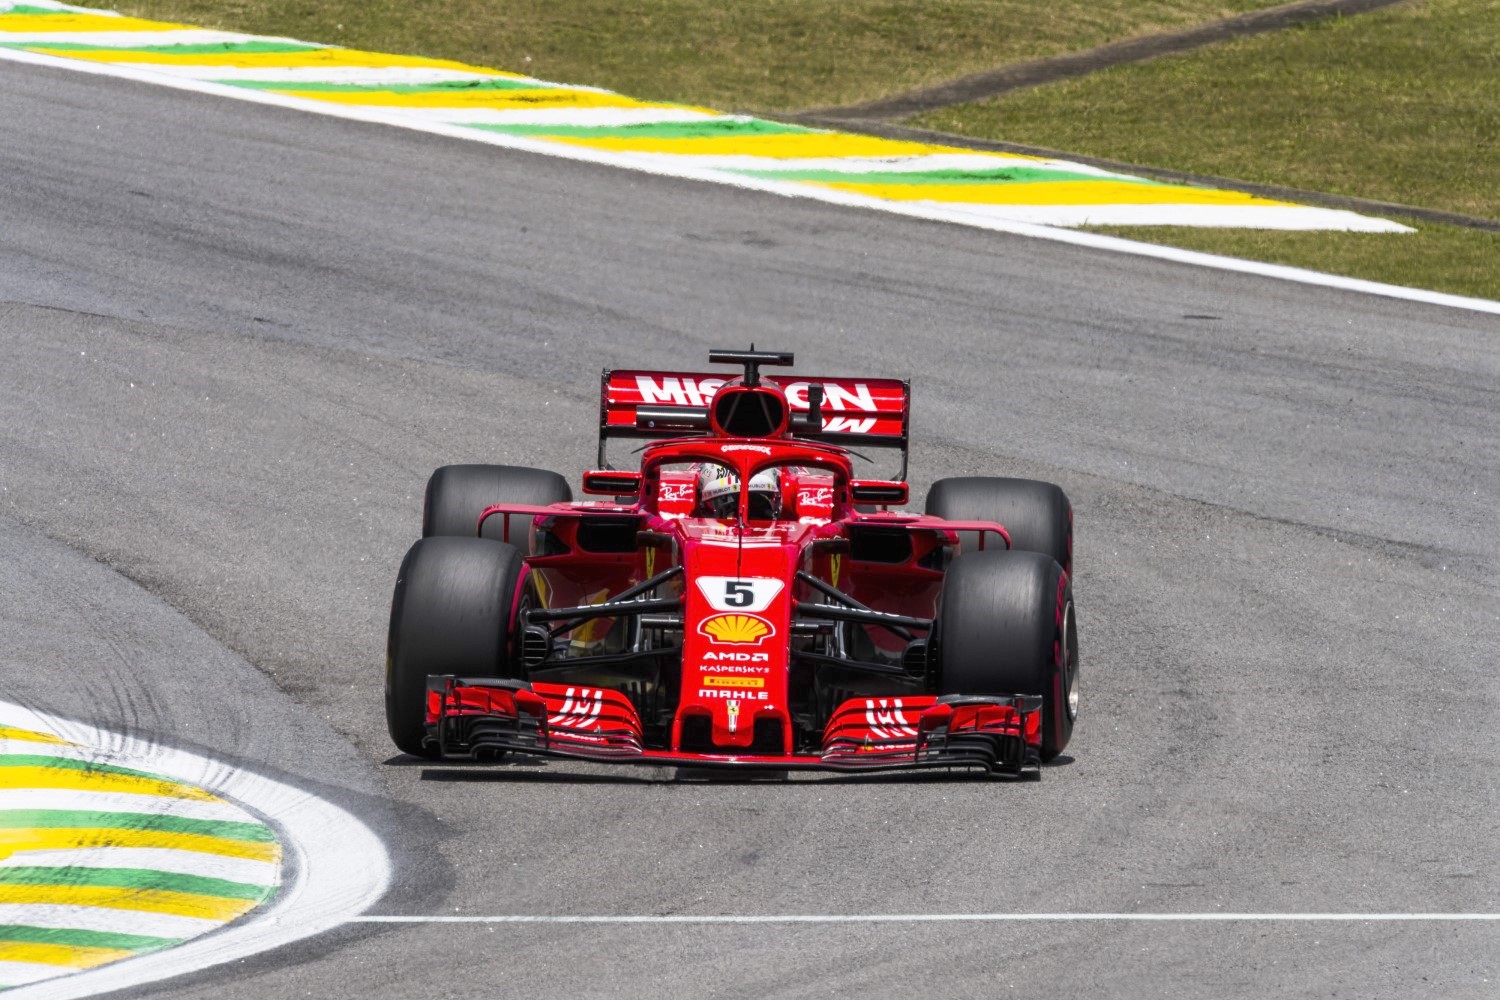 Vettel's Ferrari was a close third